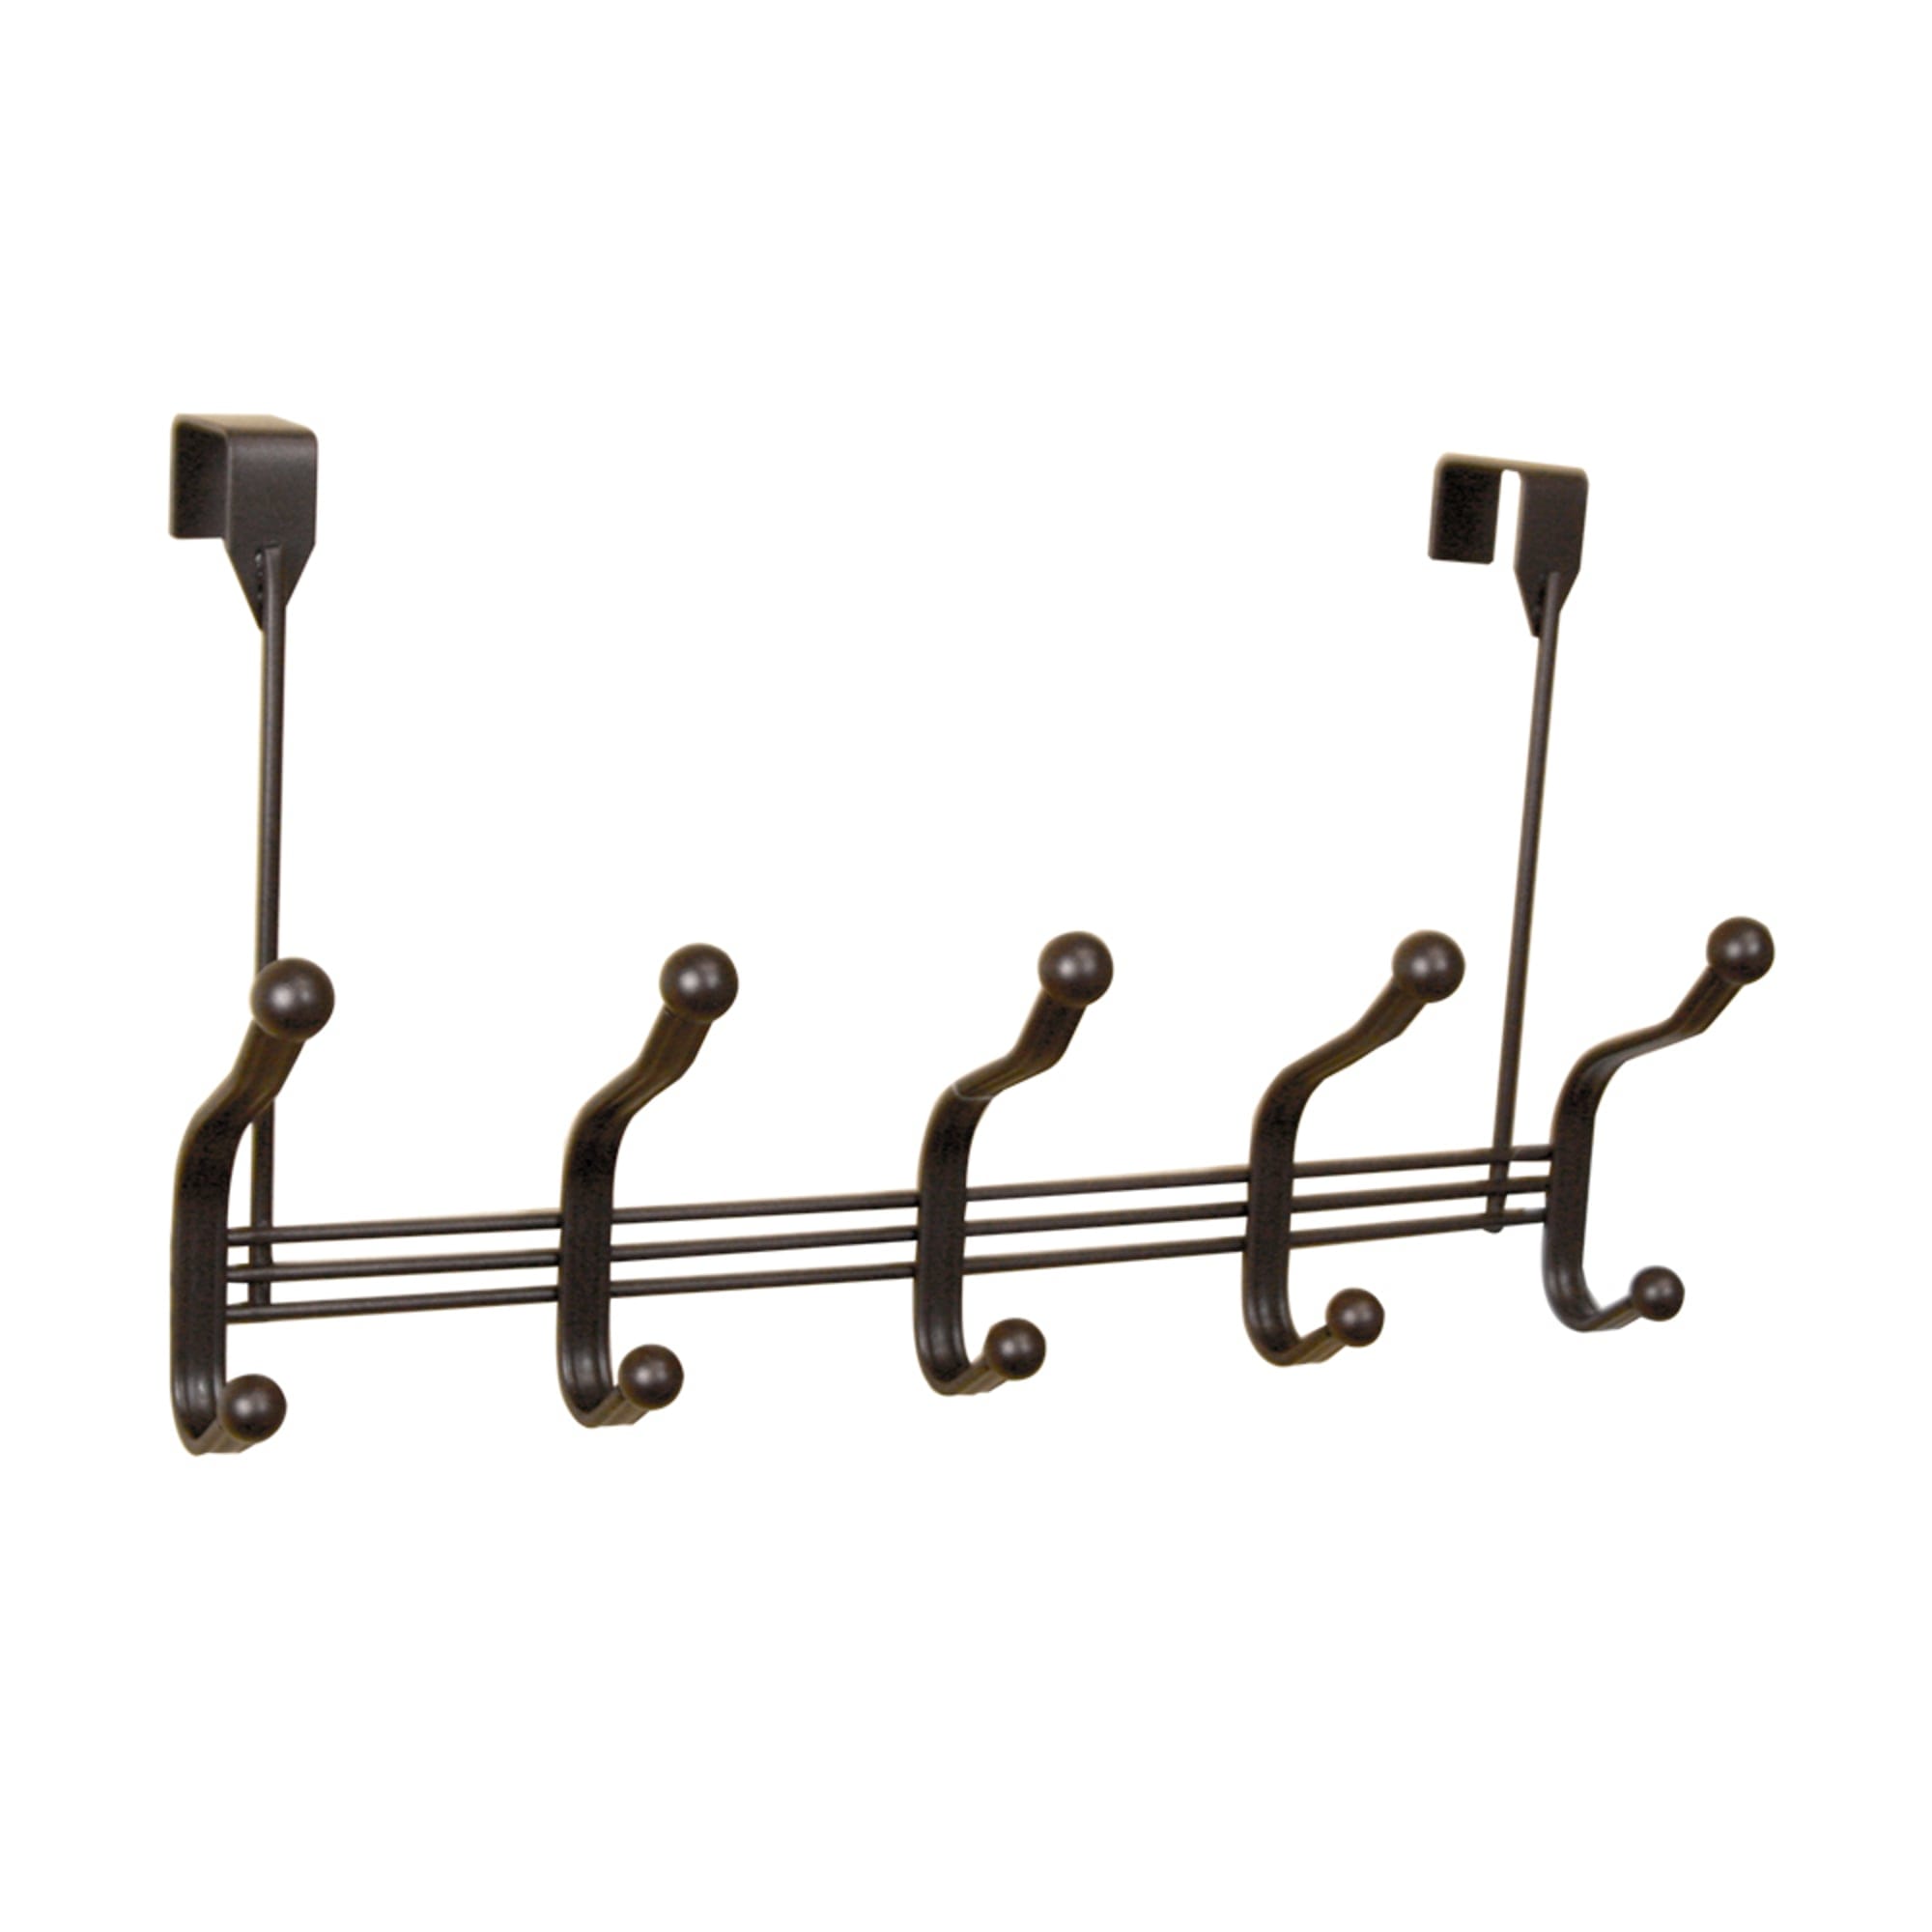 Home Basics 5 Dual Hook Over the Door Steel Organizing Rack, Bronze $8.00 EACH, CASE PACK OF 12